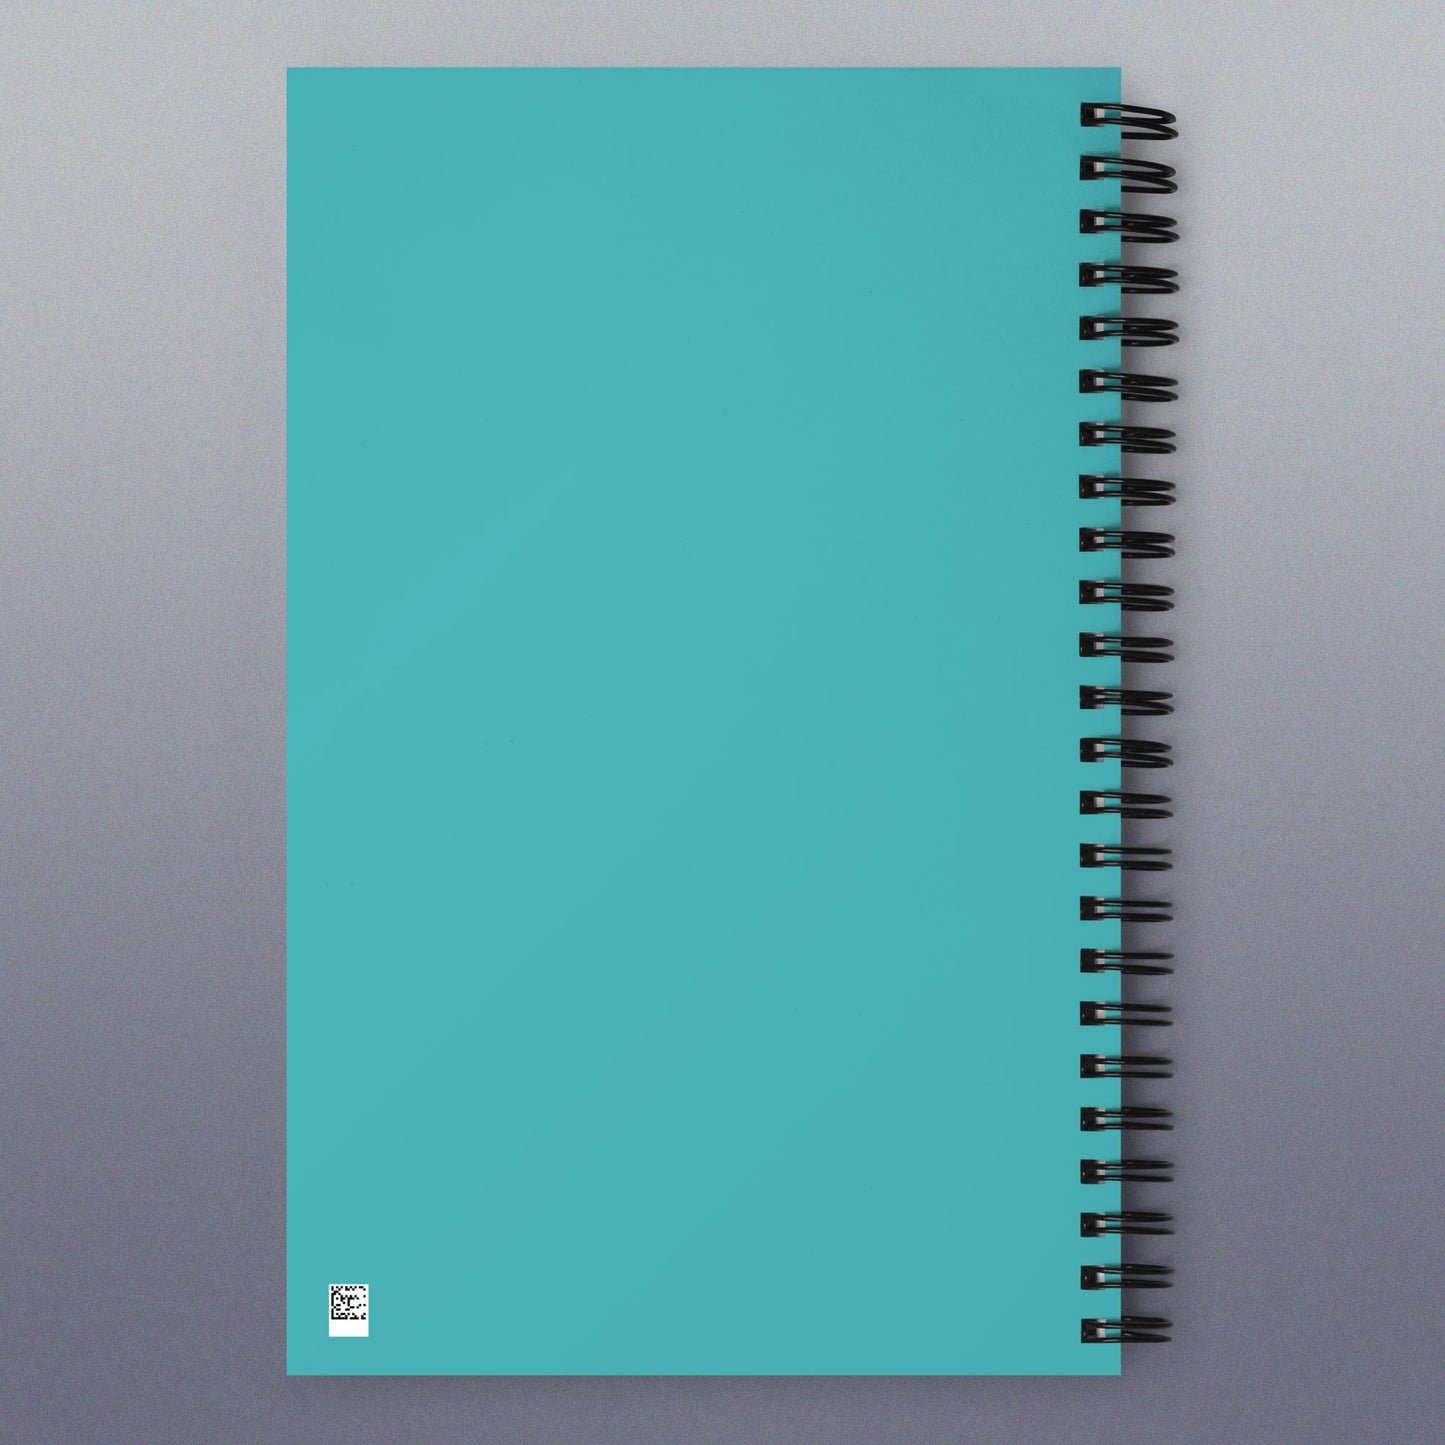 Align, Center, Breathe Spiral notebook